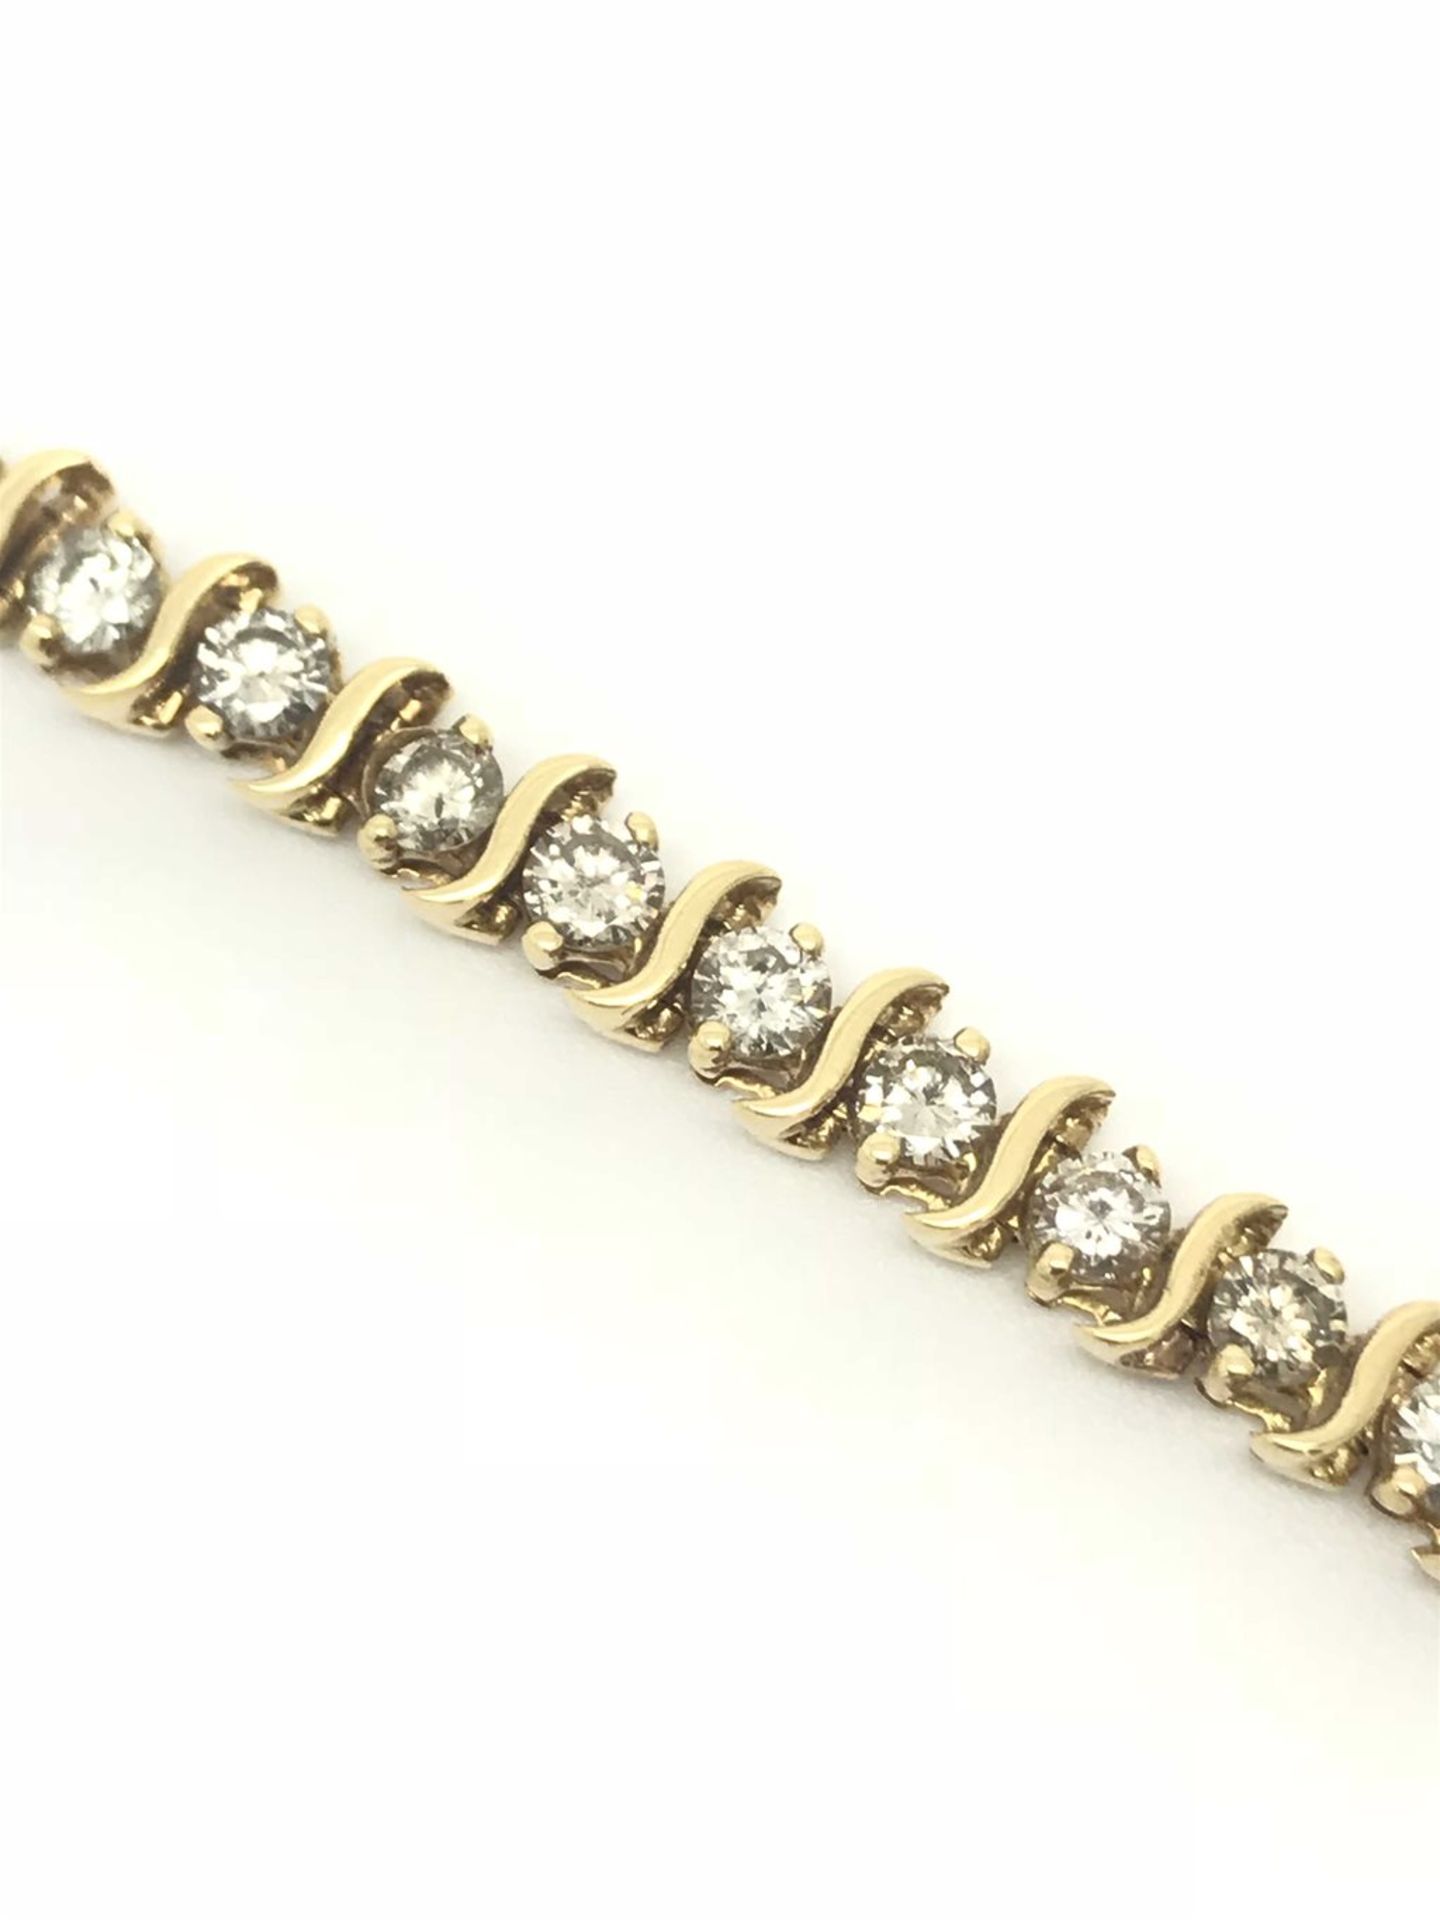 5.10ct Diamond Tennis Bracelet, 18ct Yellow Gold - Image 4 of 5